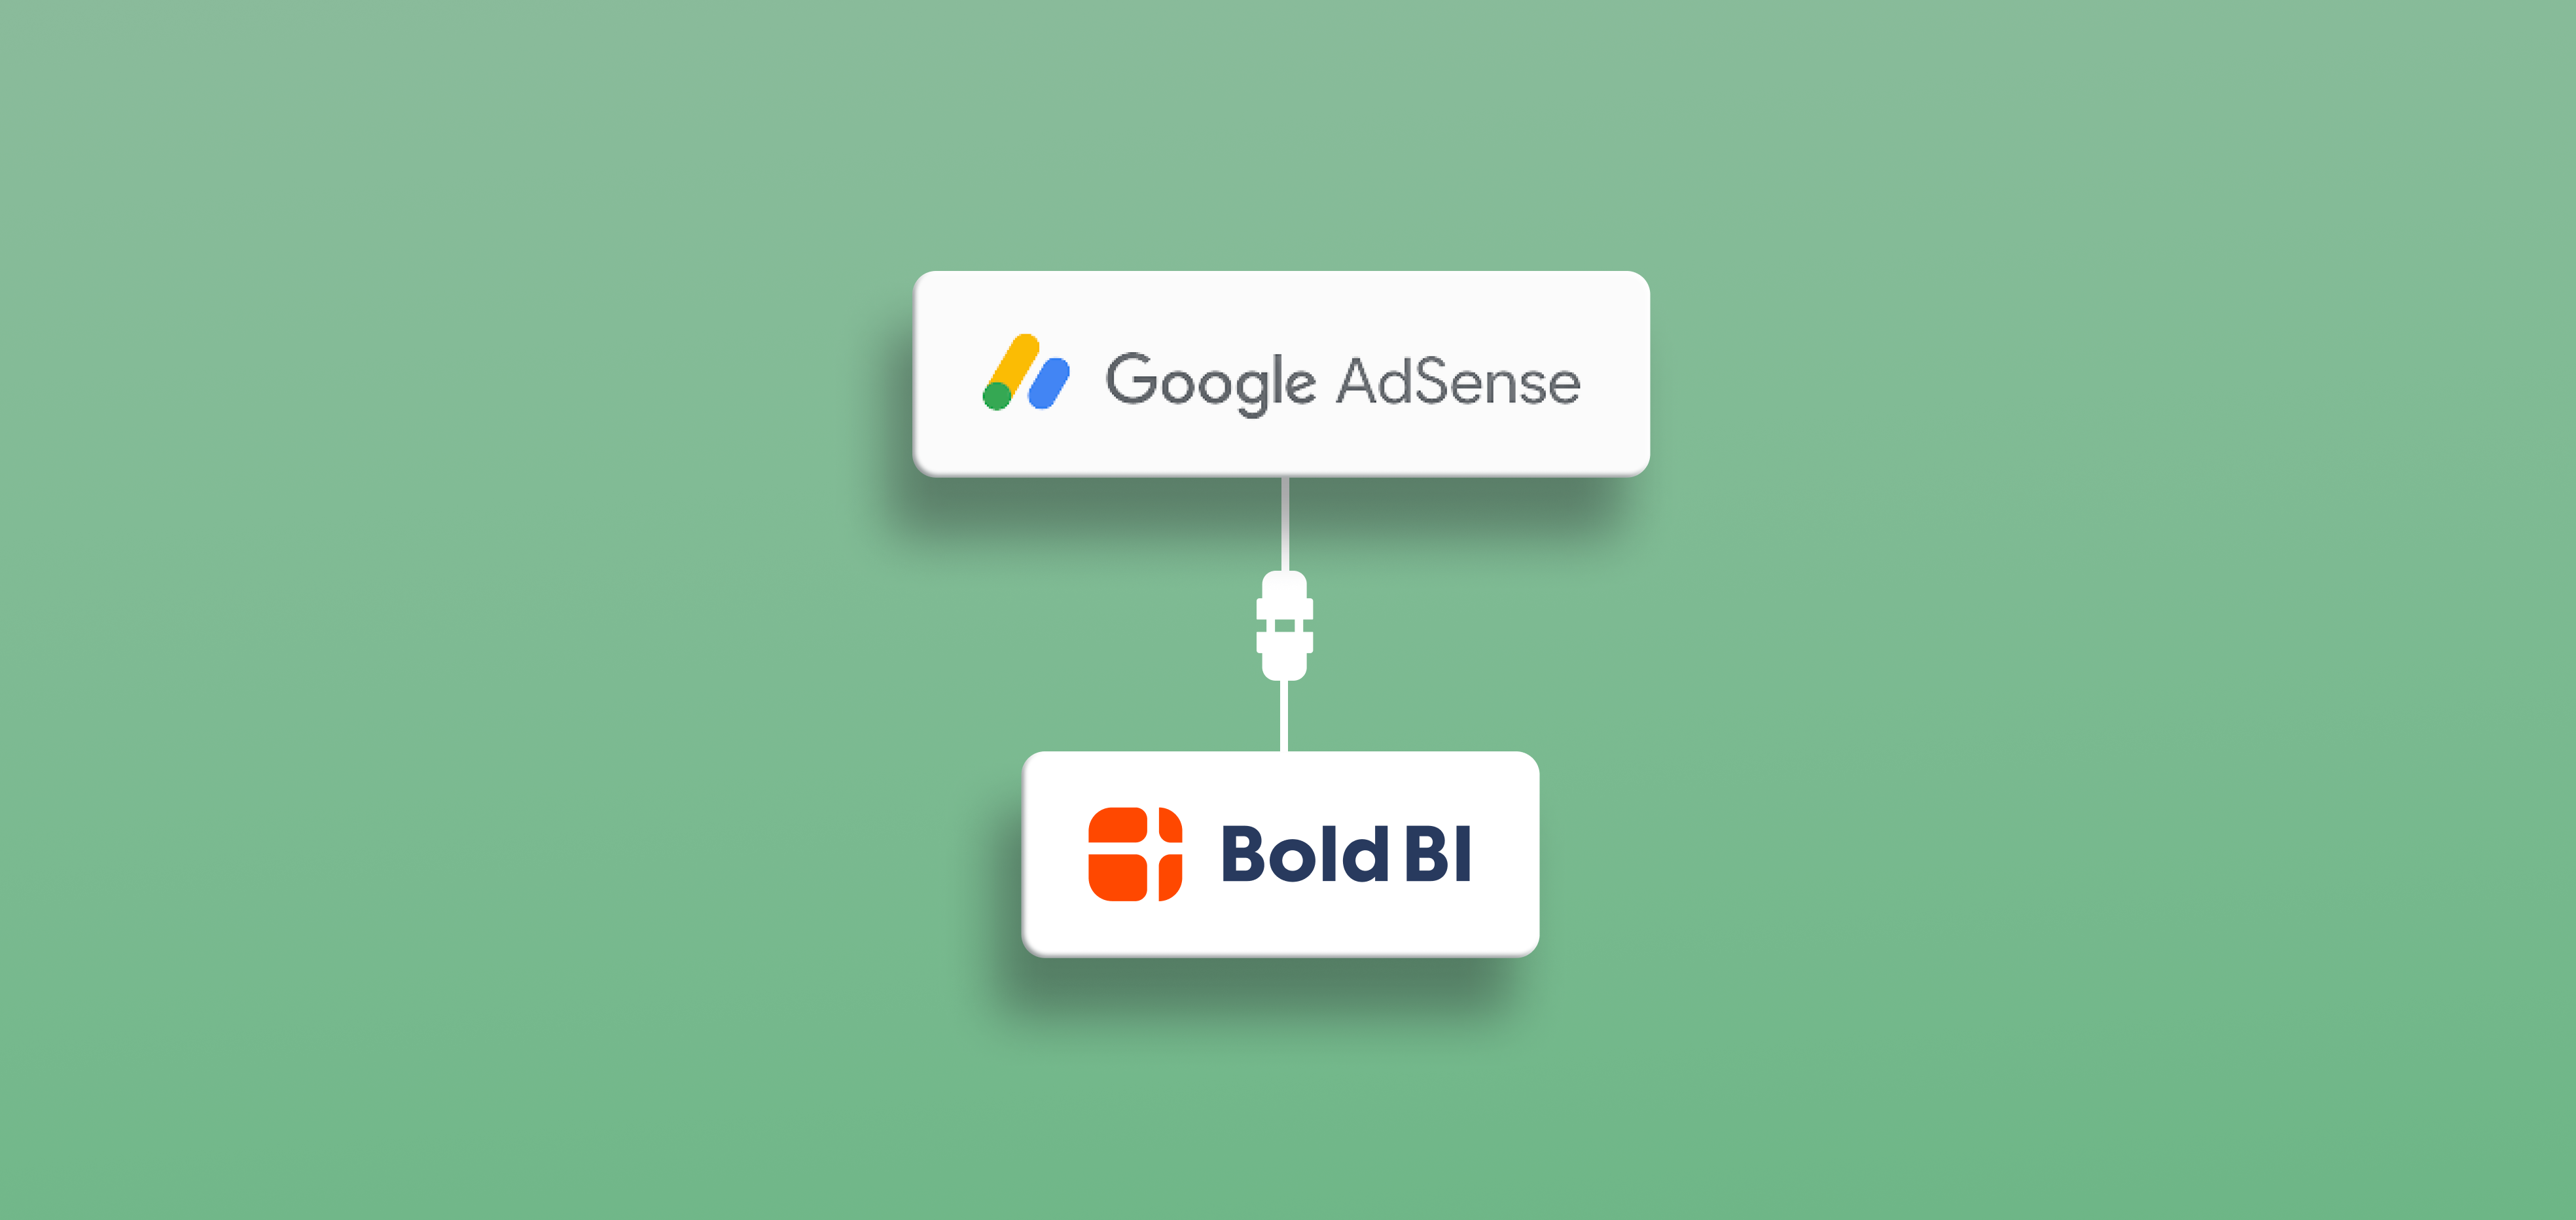 Connecting Bold BI to Google AdSense data source